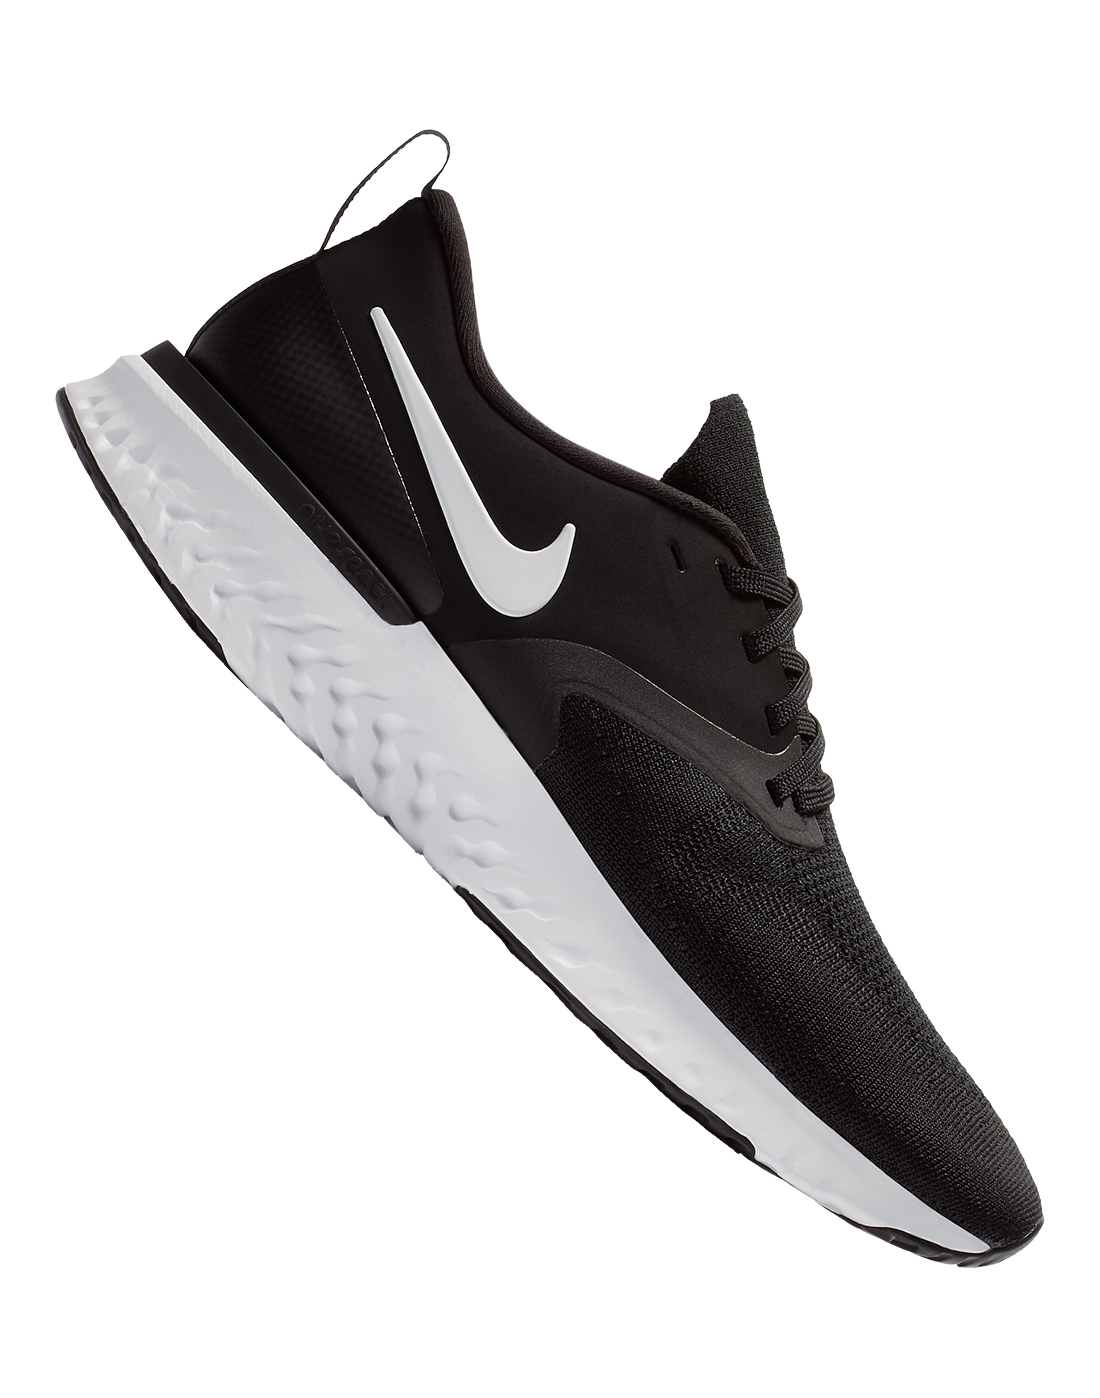 Black & White Nike Odyssey React Flyknit | Style Sports